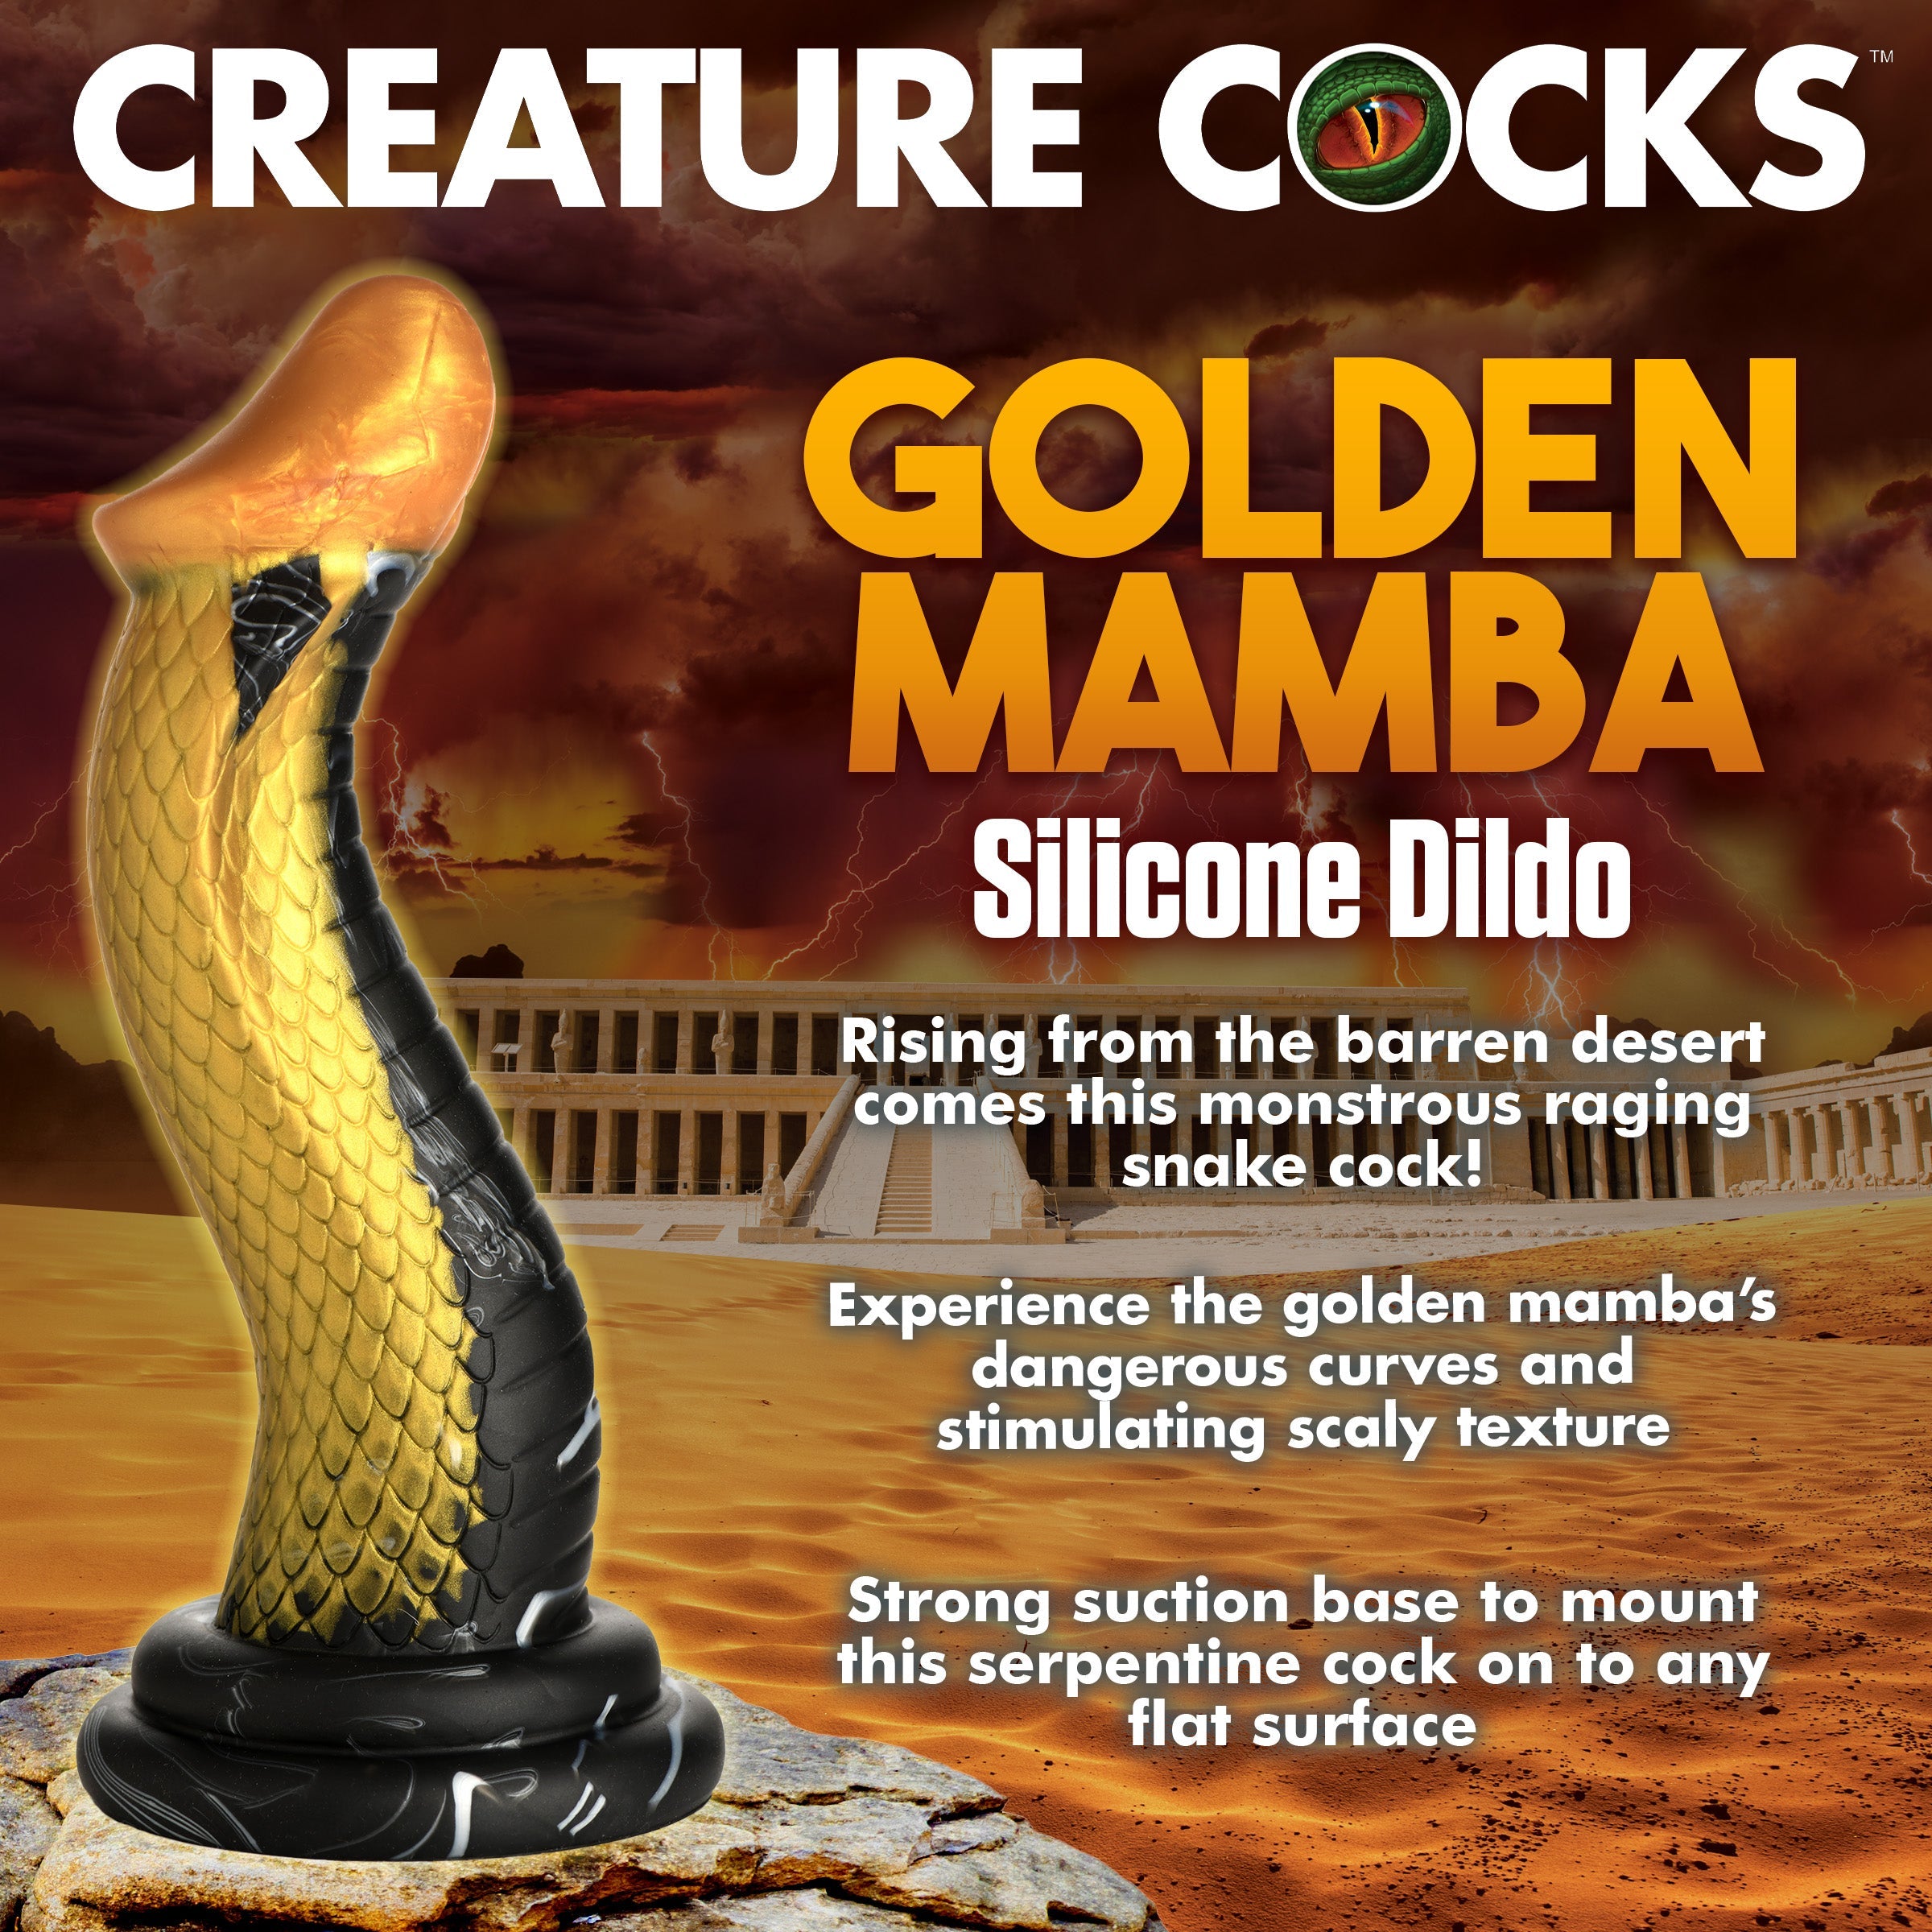 Golden Mamba Silicone Dildo